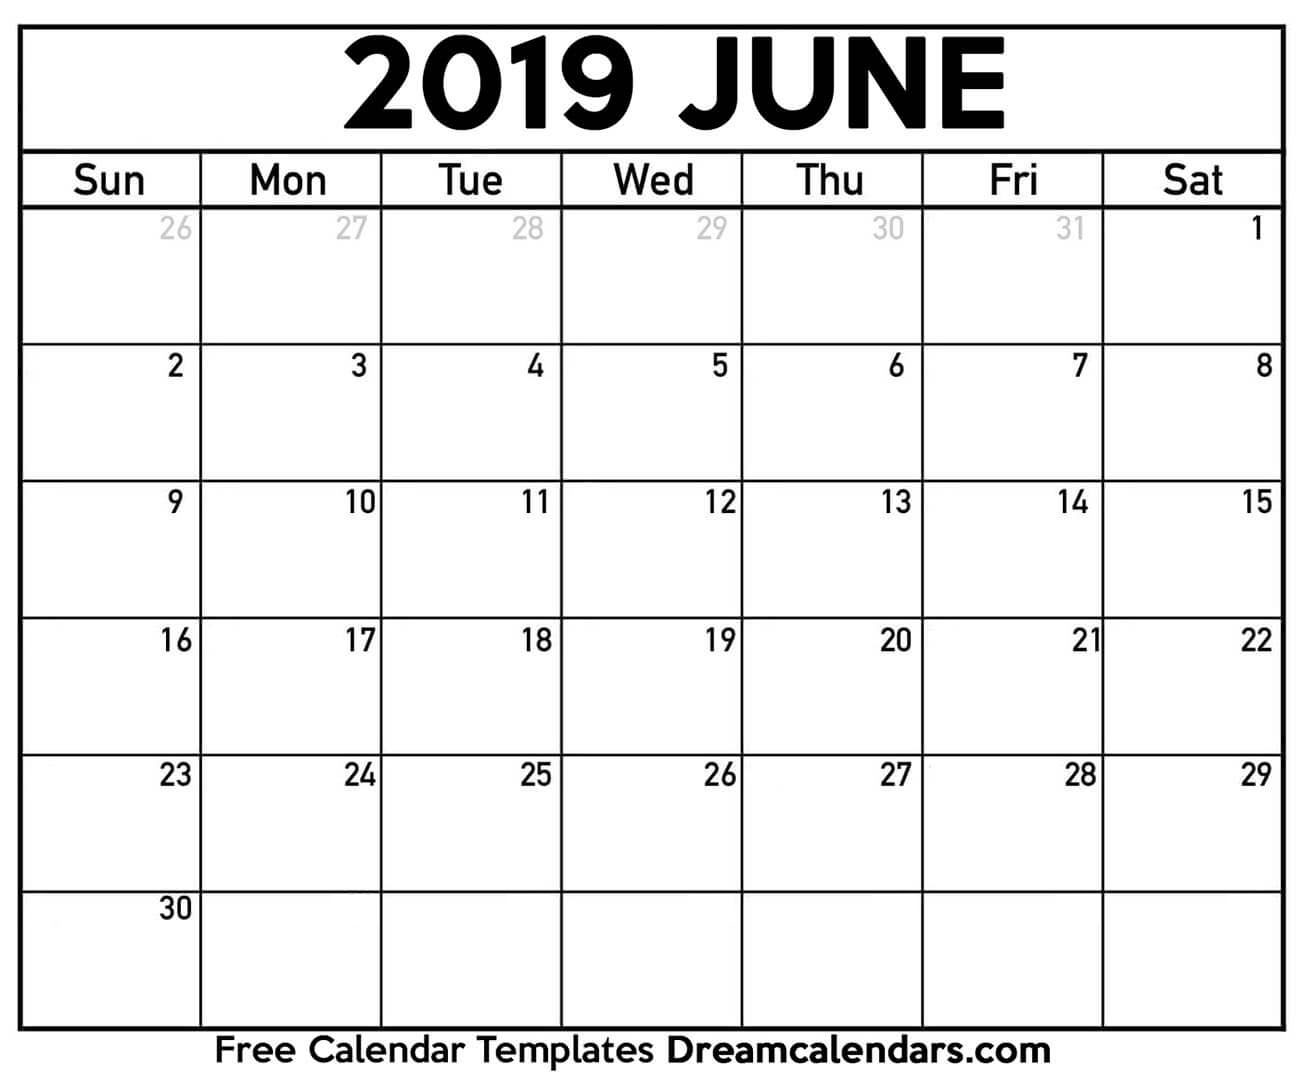 Printable June 2019 Calendar by Dream Calendars on CodePen